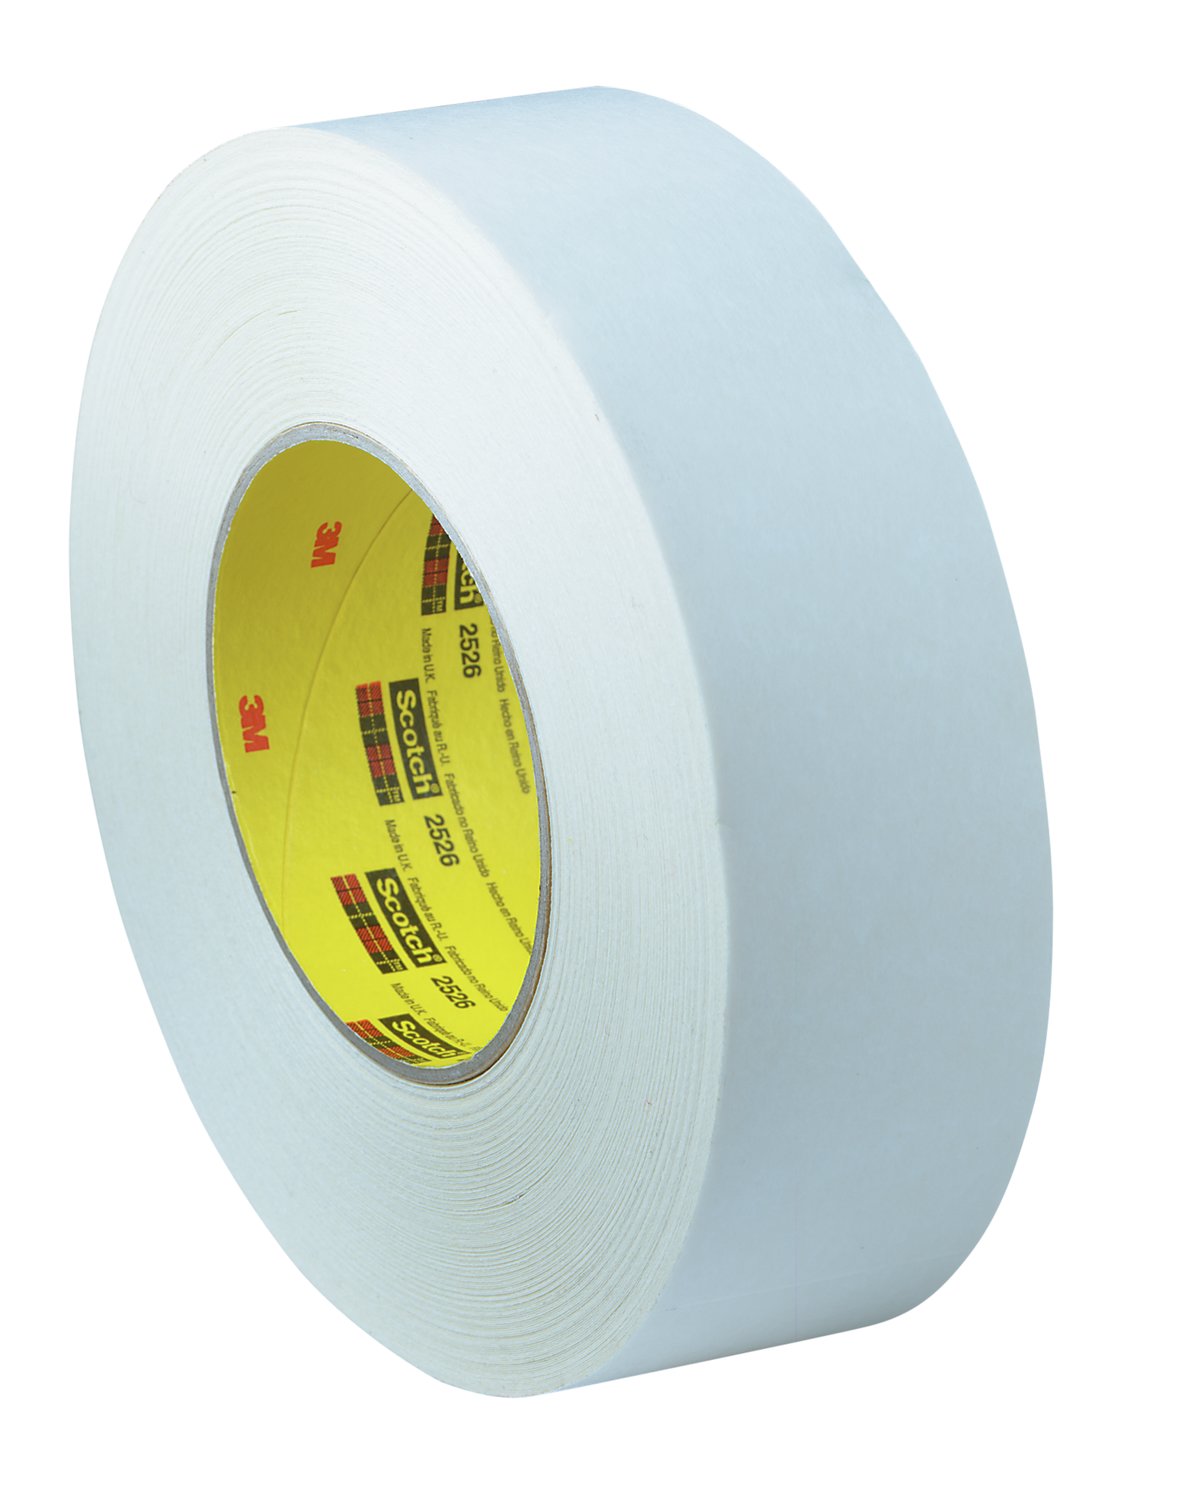 7010334126 - 3M Textile Flatback Tape 2526, White, 12 in x 60 yd, 9.8 mil, 4
Rolls/Case